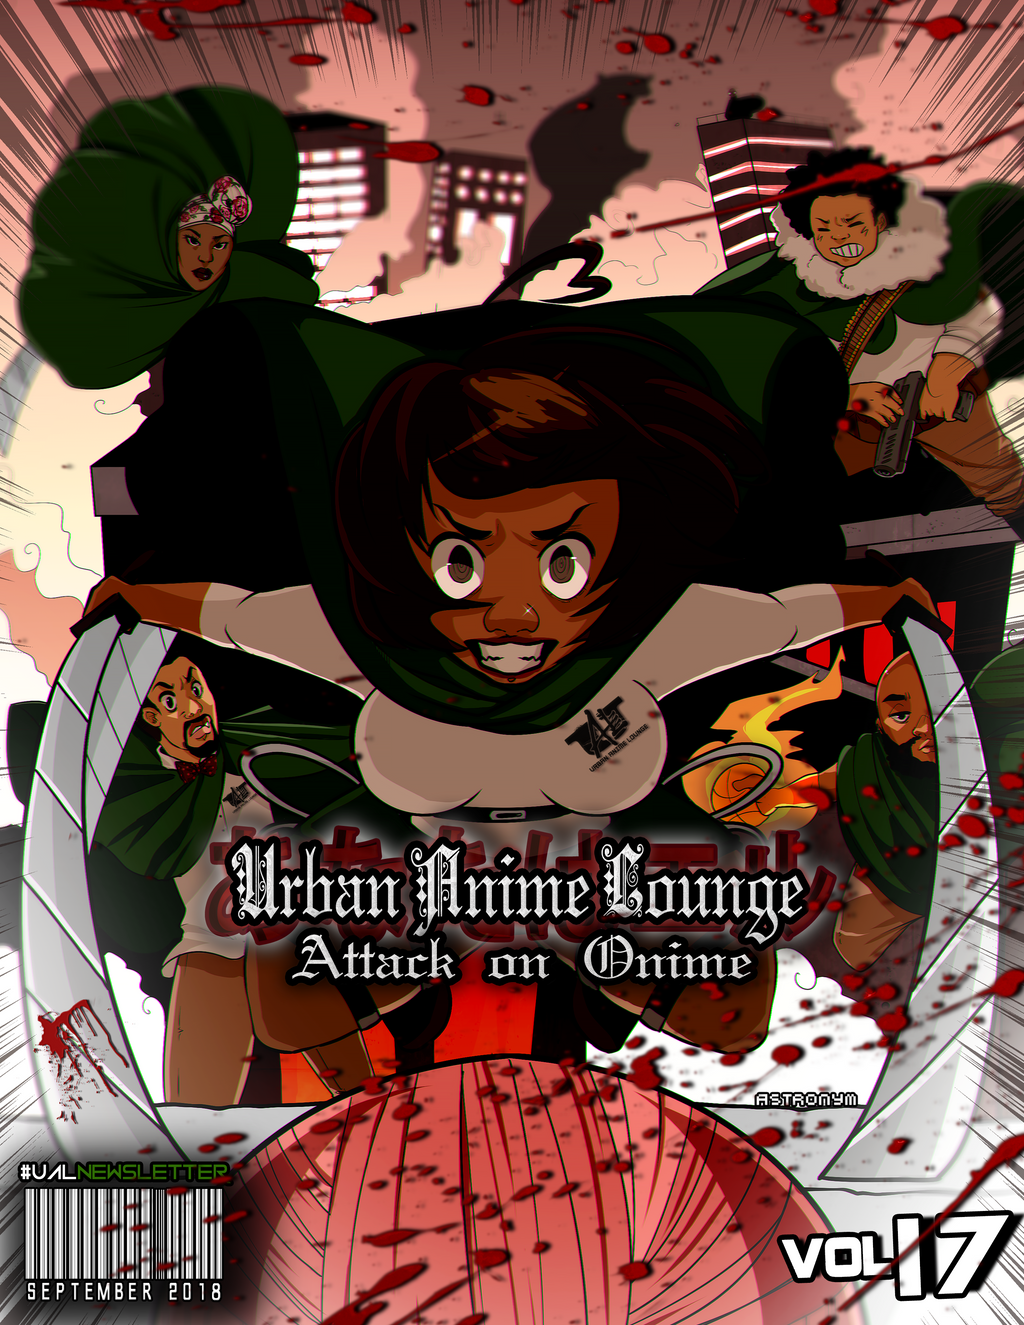 Urban Anime Lounge: Newsletter Volume 17 - Attack on Onime